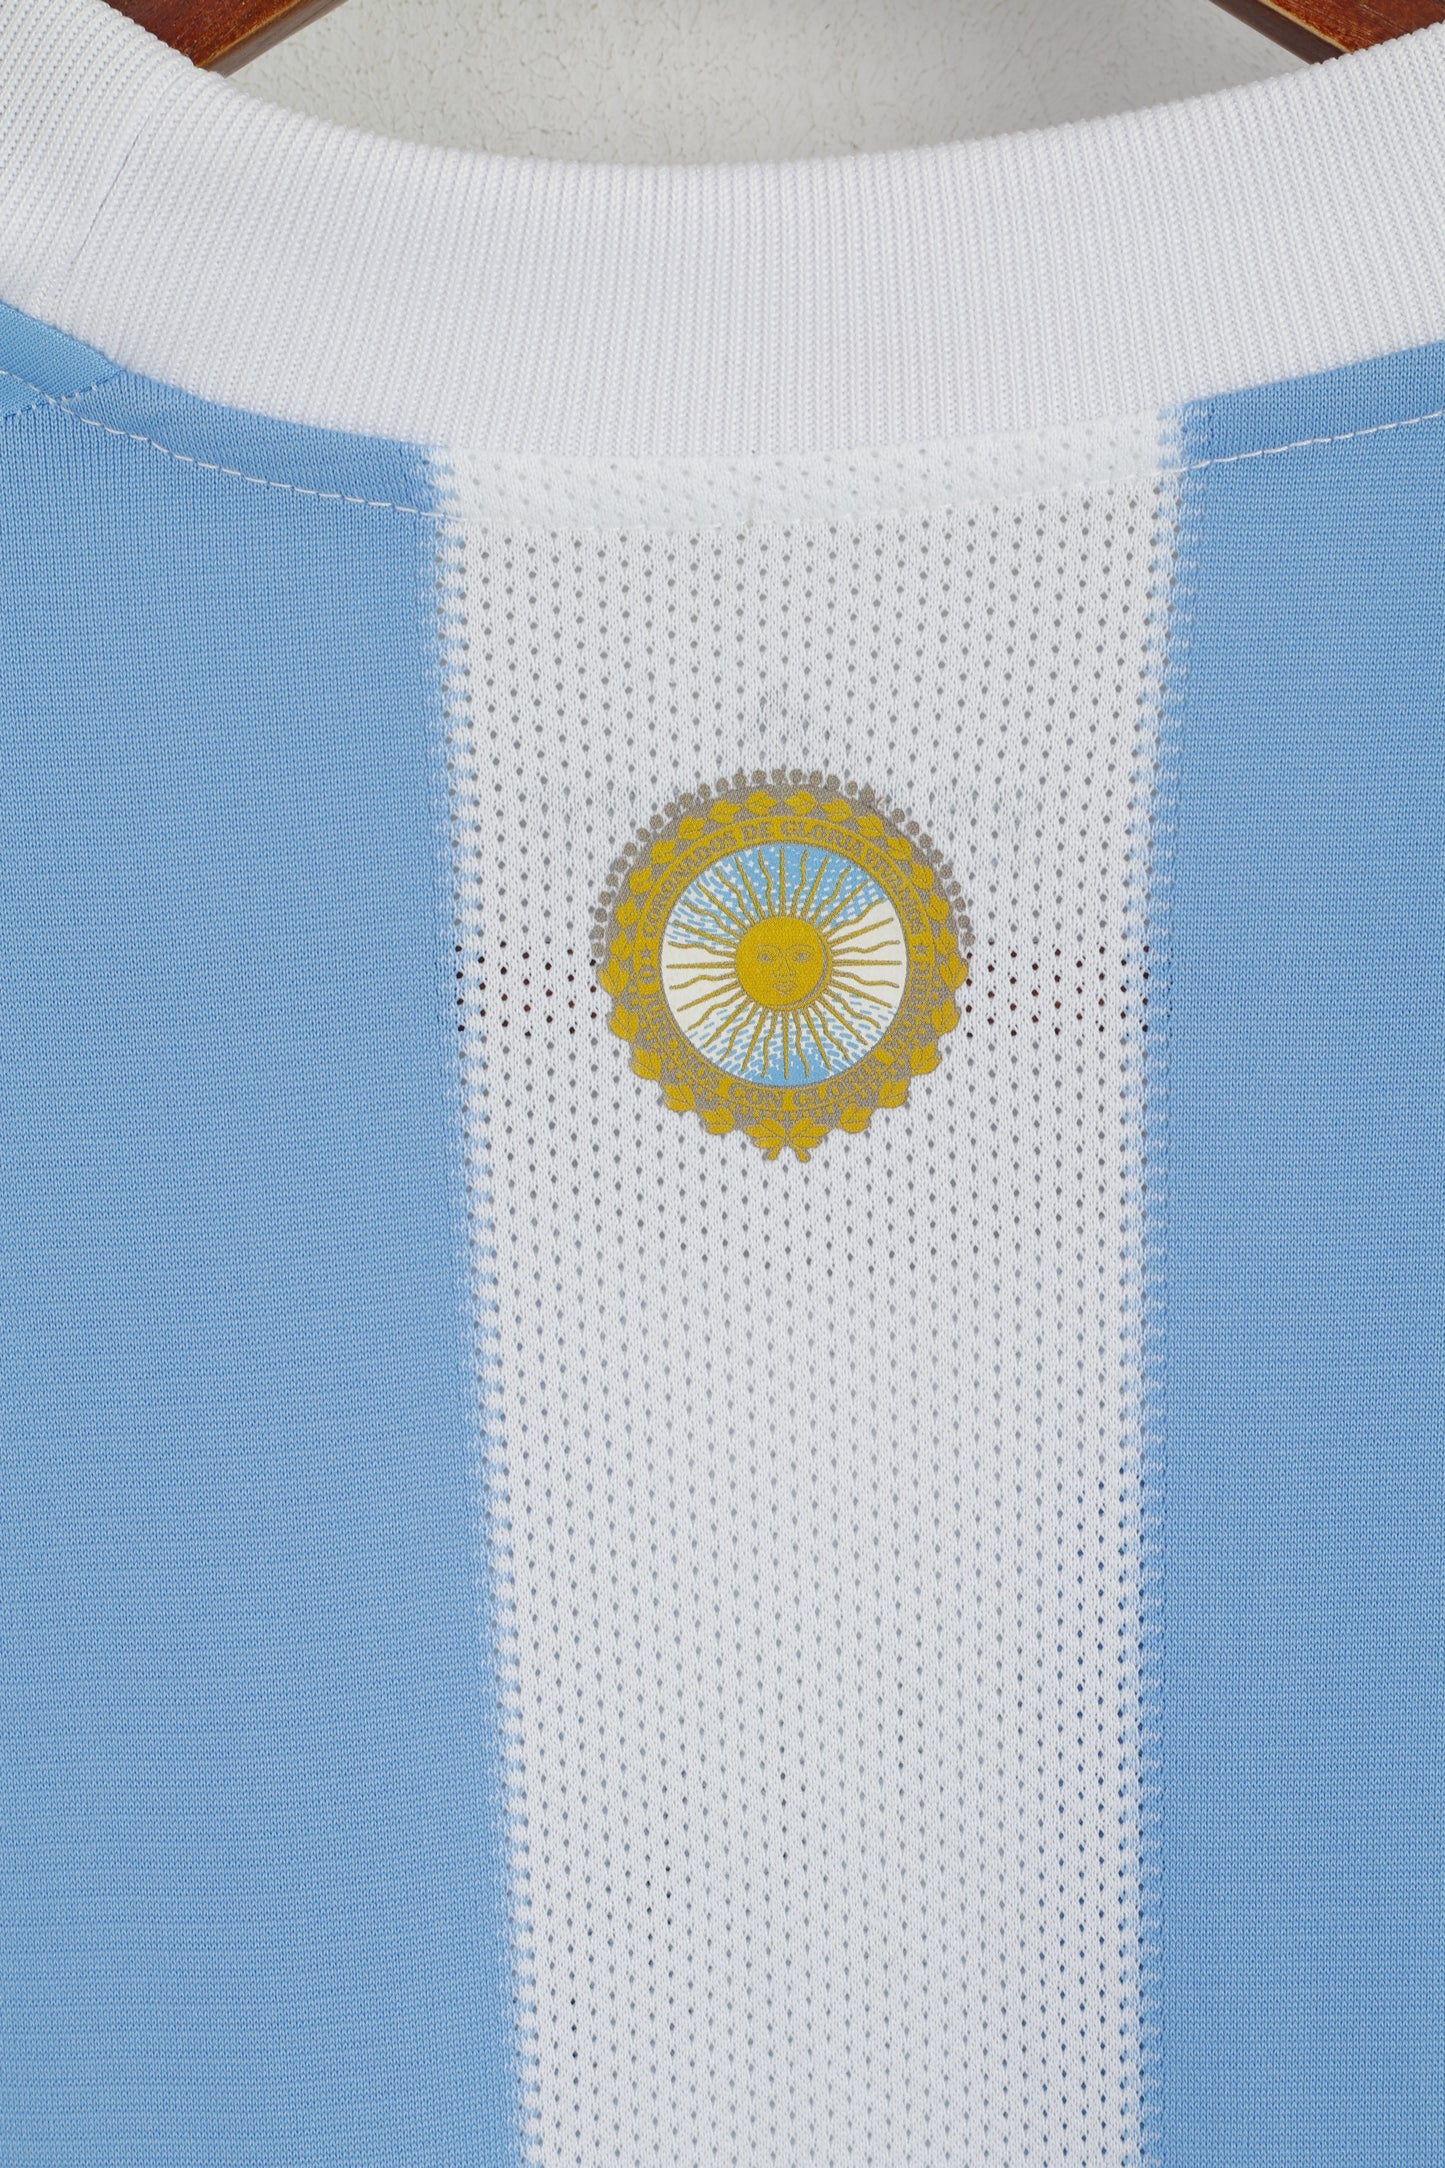 Adidas AFA Men M Shirt White Blue Striped Argentina Football Soccer Trikot Vintage Jersey Top